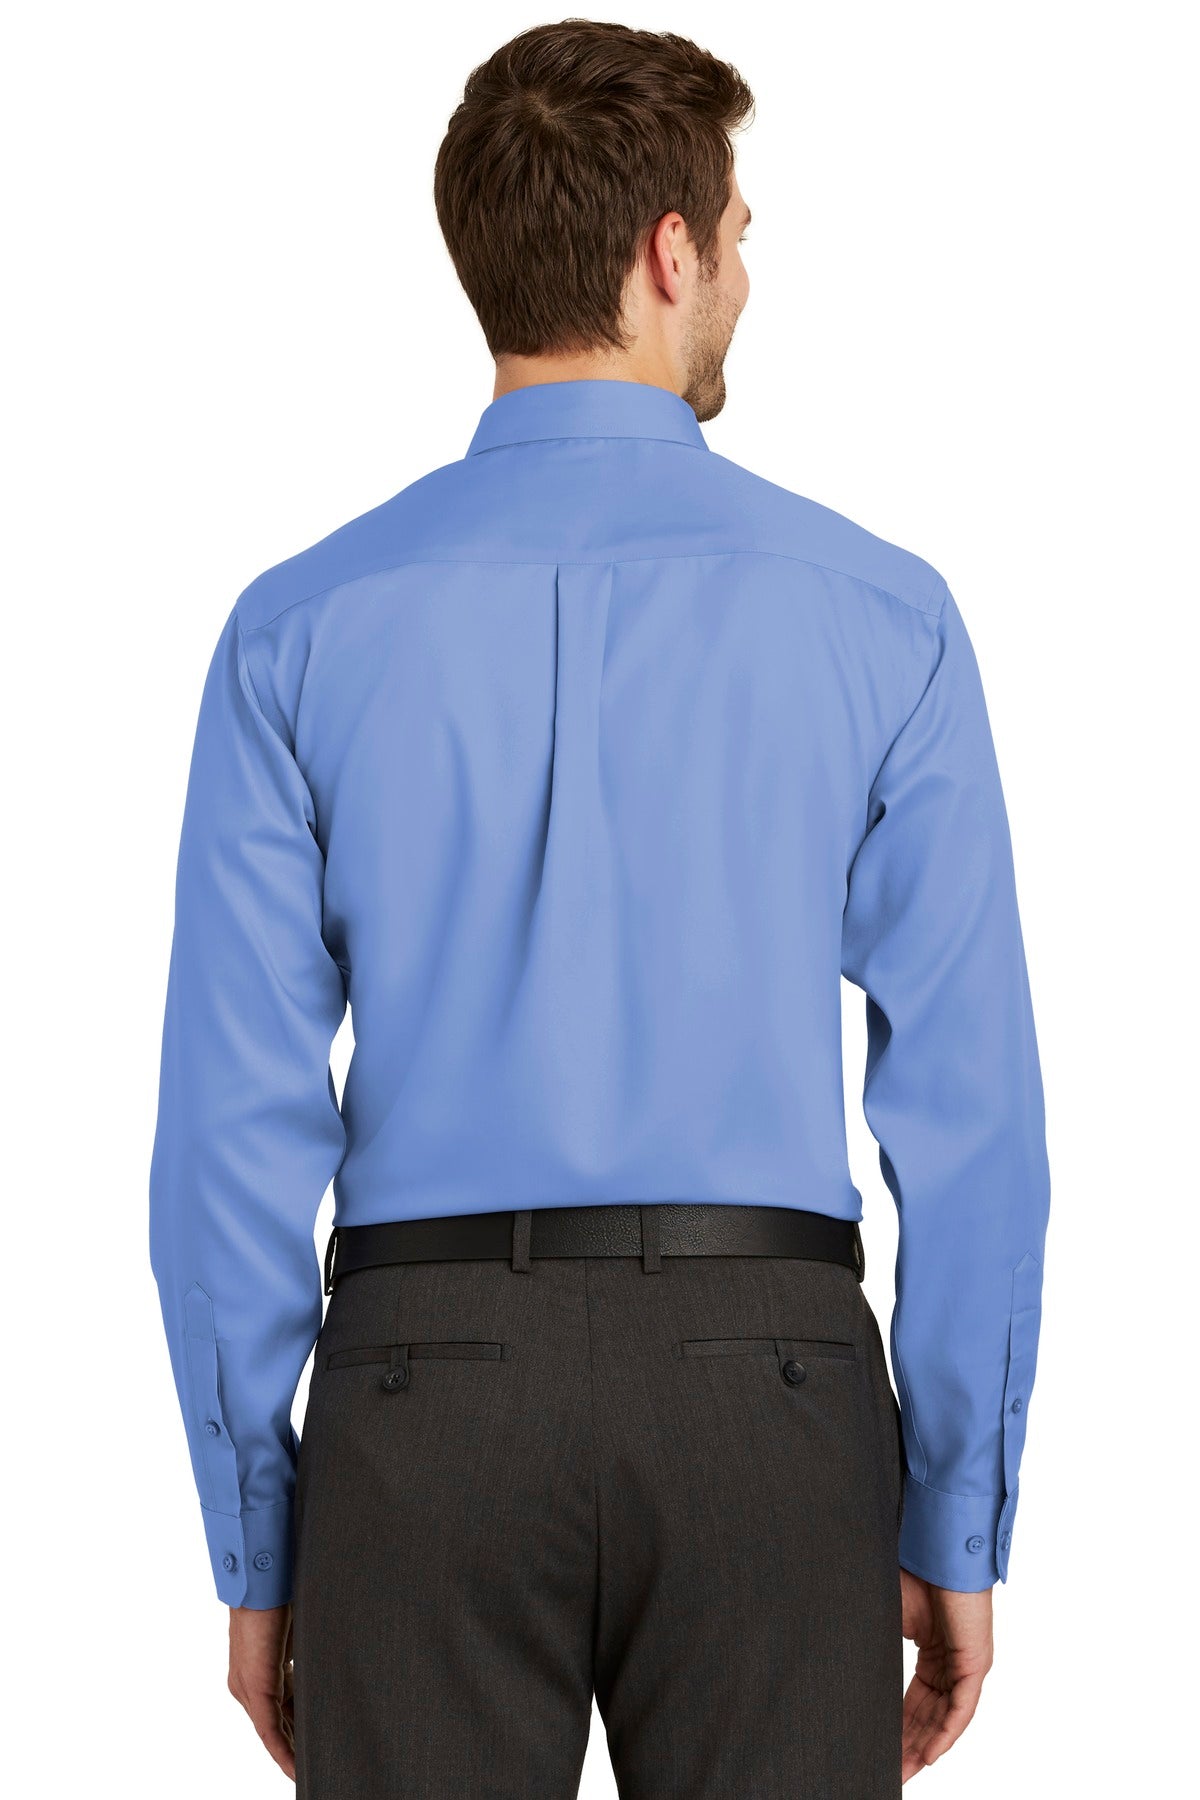 Port Authority Tall Non-Iron Twill Shirt. TLS638